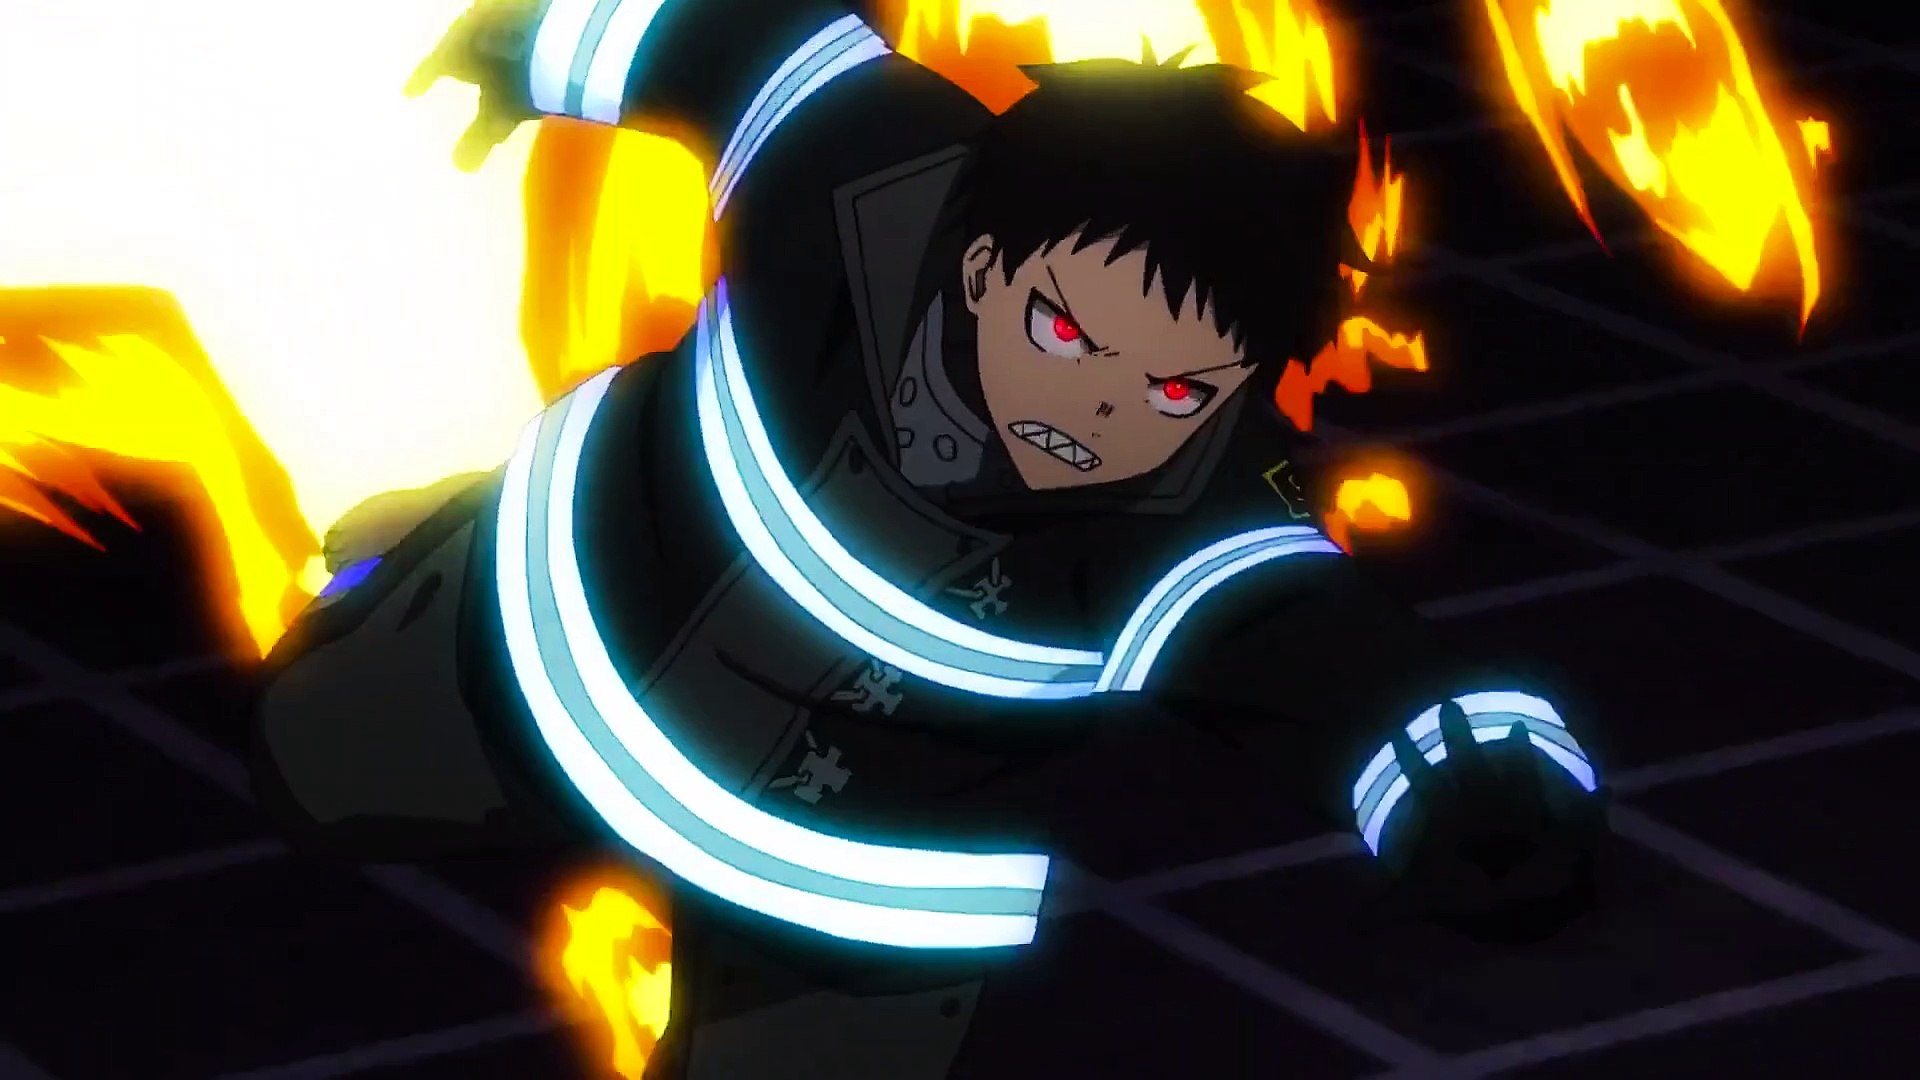 Shinra vs Kurono! Fire Force Season 2 Episode 14 